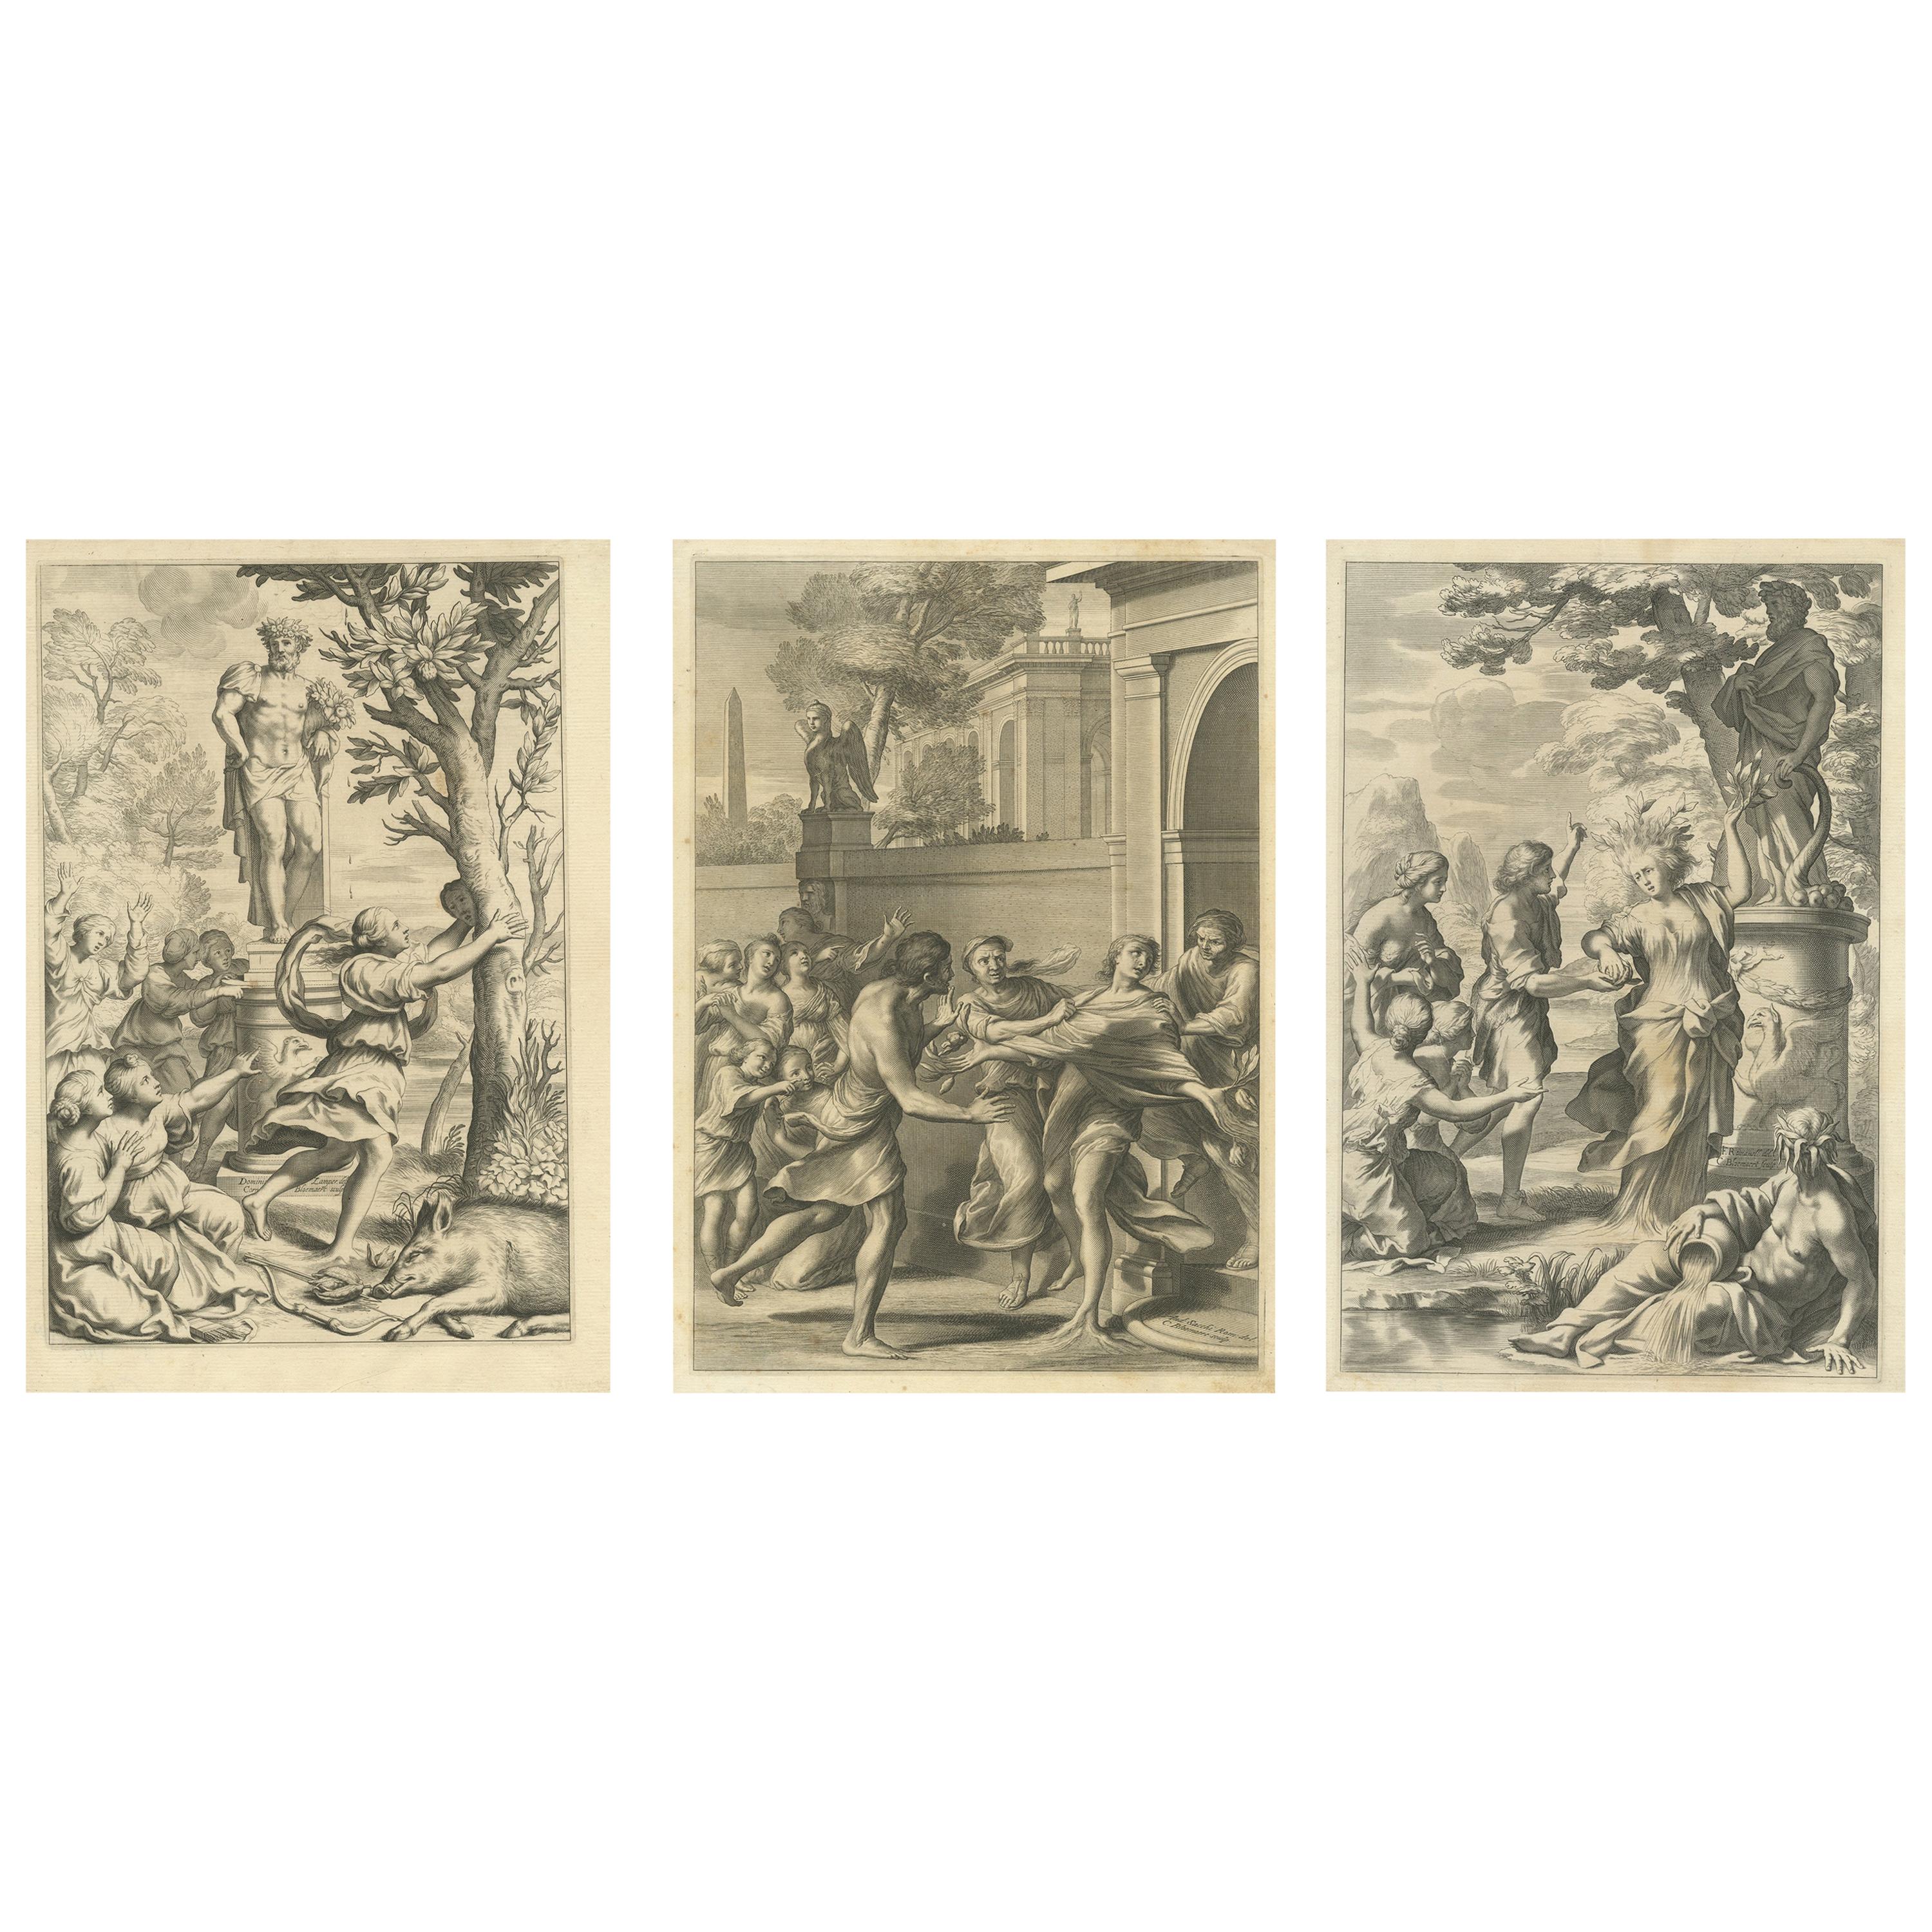 Set of 3 Antique Prints of Mythological Scenes on Lemon Varieties by Ferrari